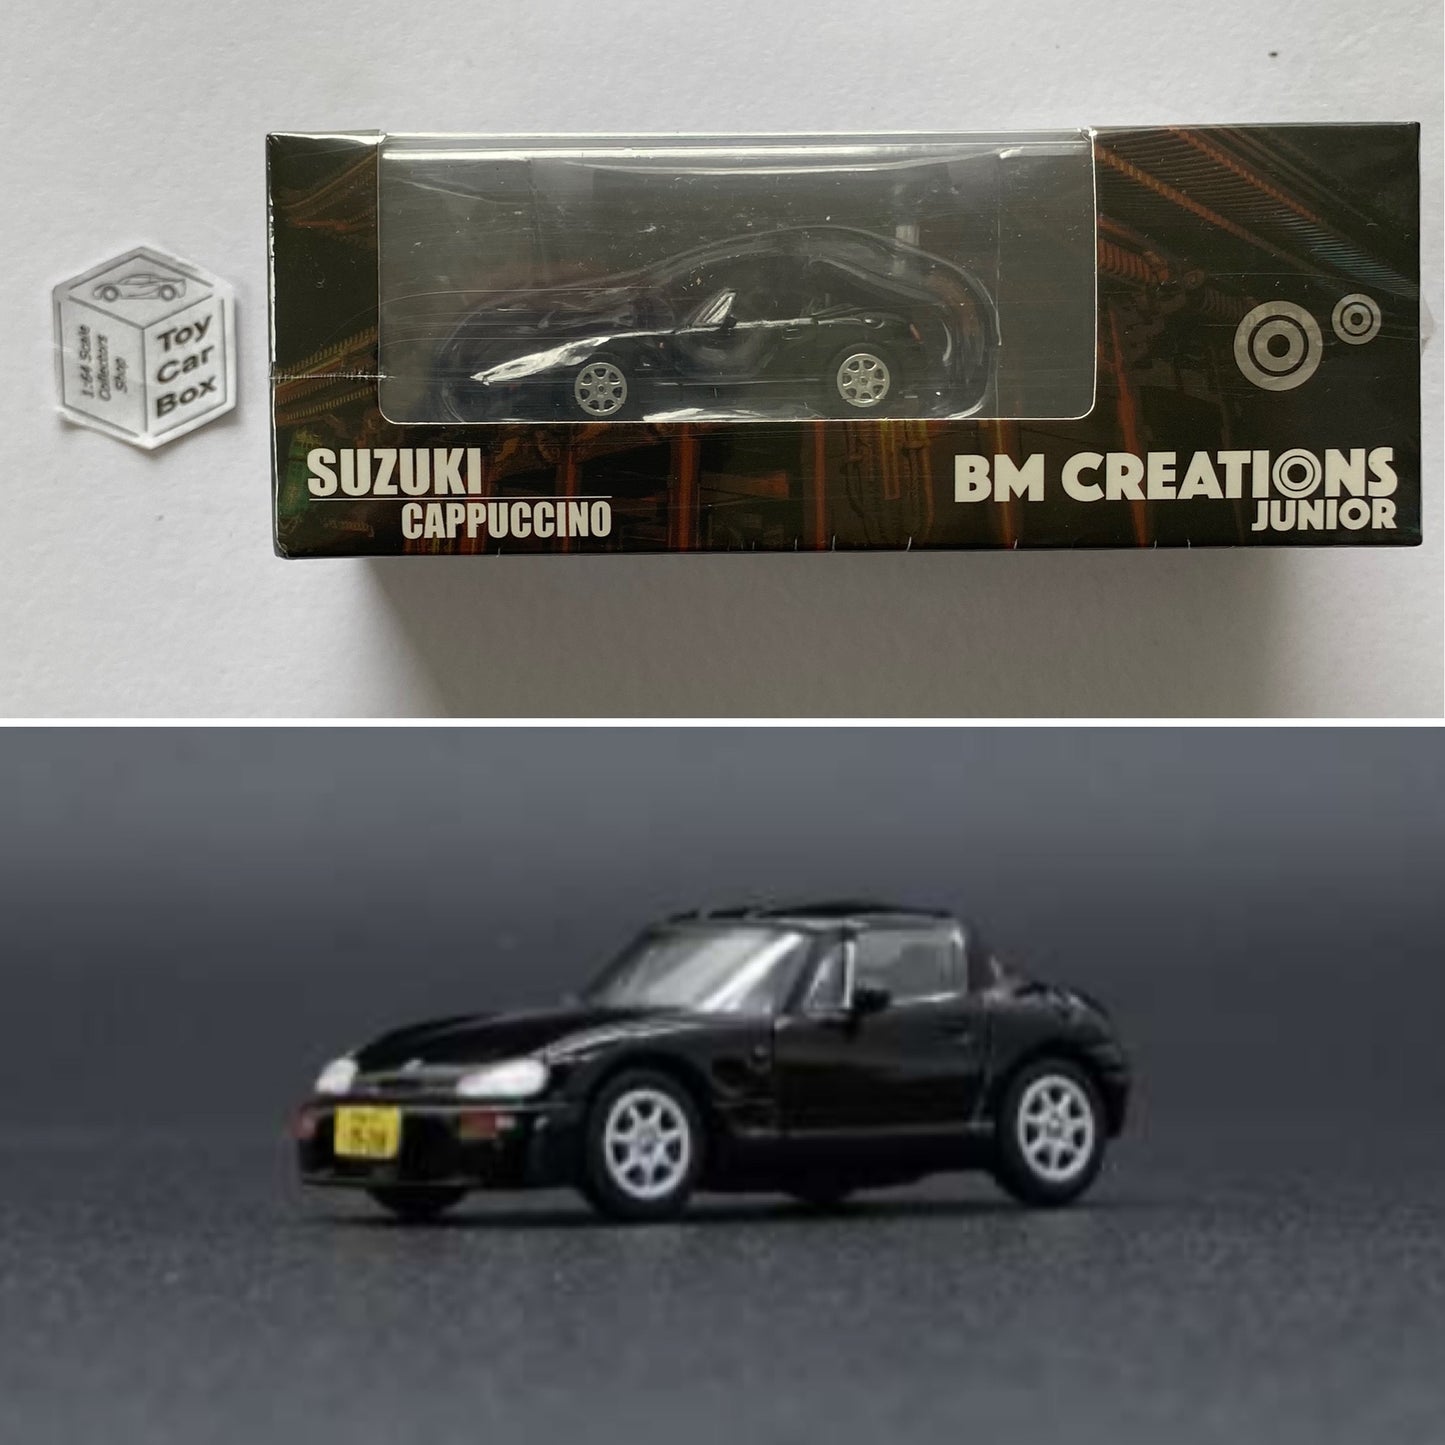 BM CREATIONS - Suzuki Cappuccino (1:64 Scale - Black - RHD) M27g